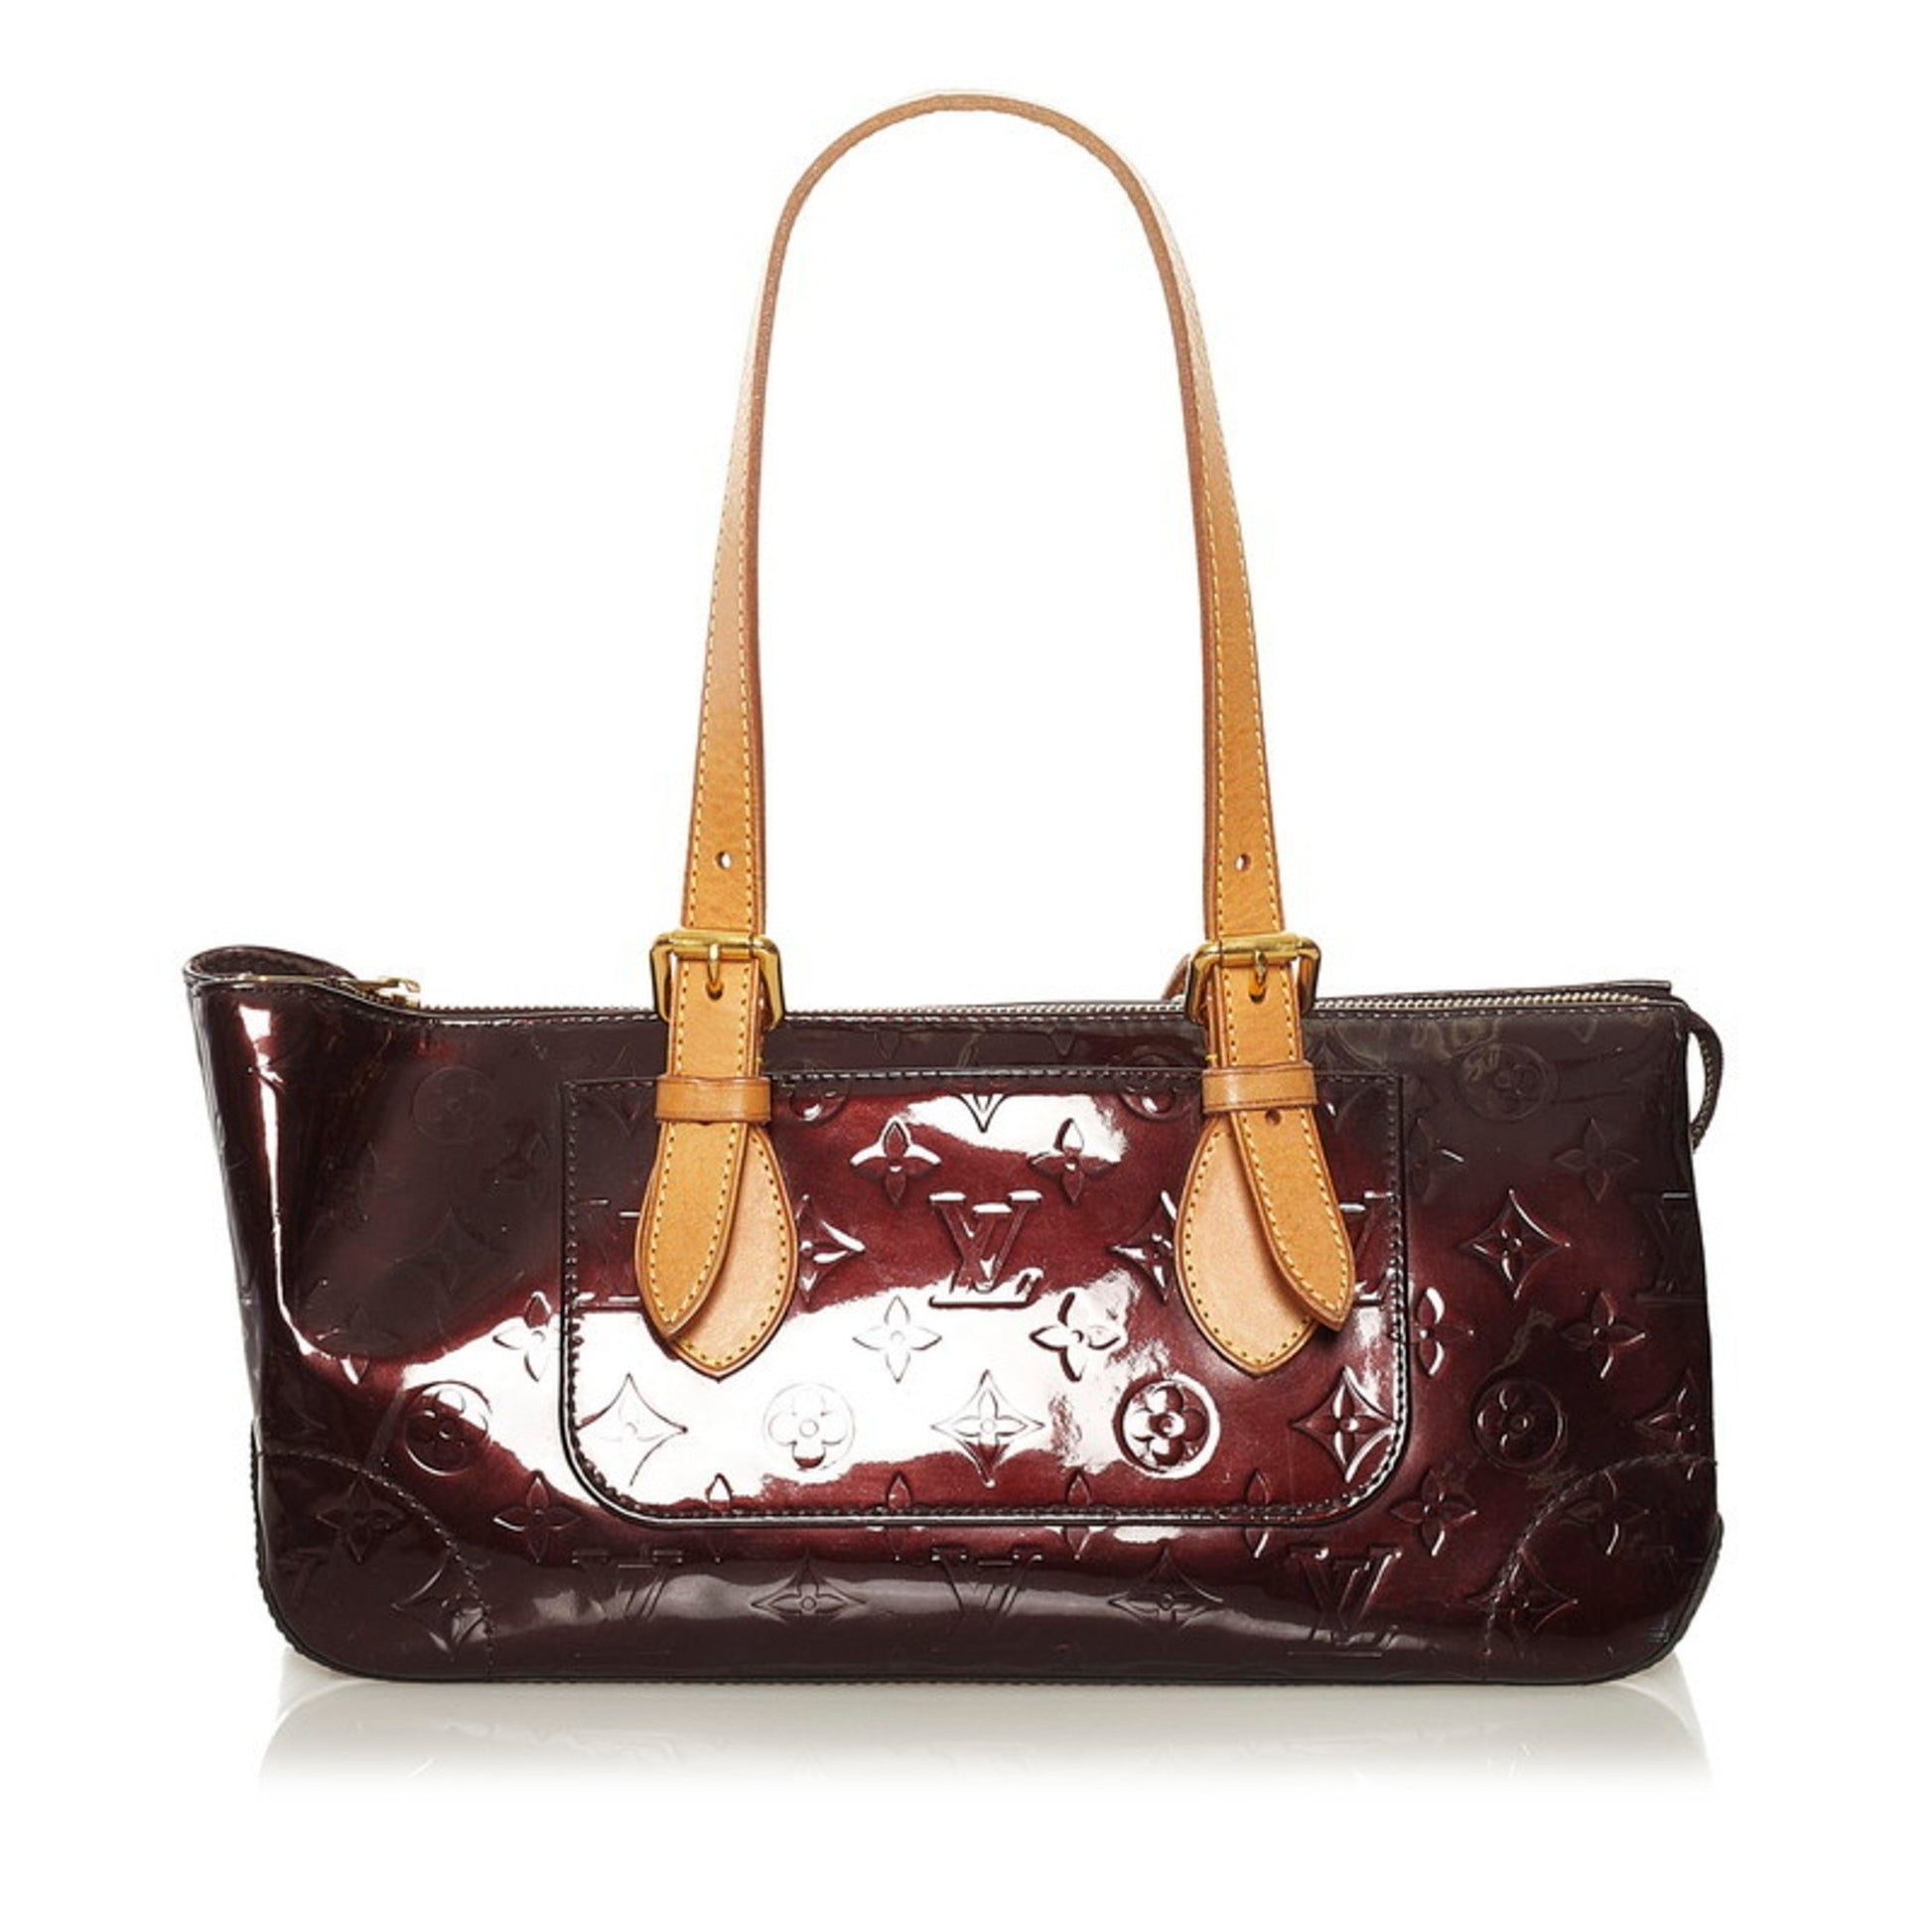 Violet Vernis 'Rosewood' Amarante Bag, Authentic & Vintage